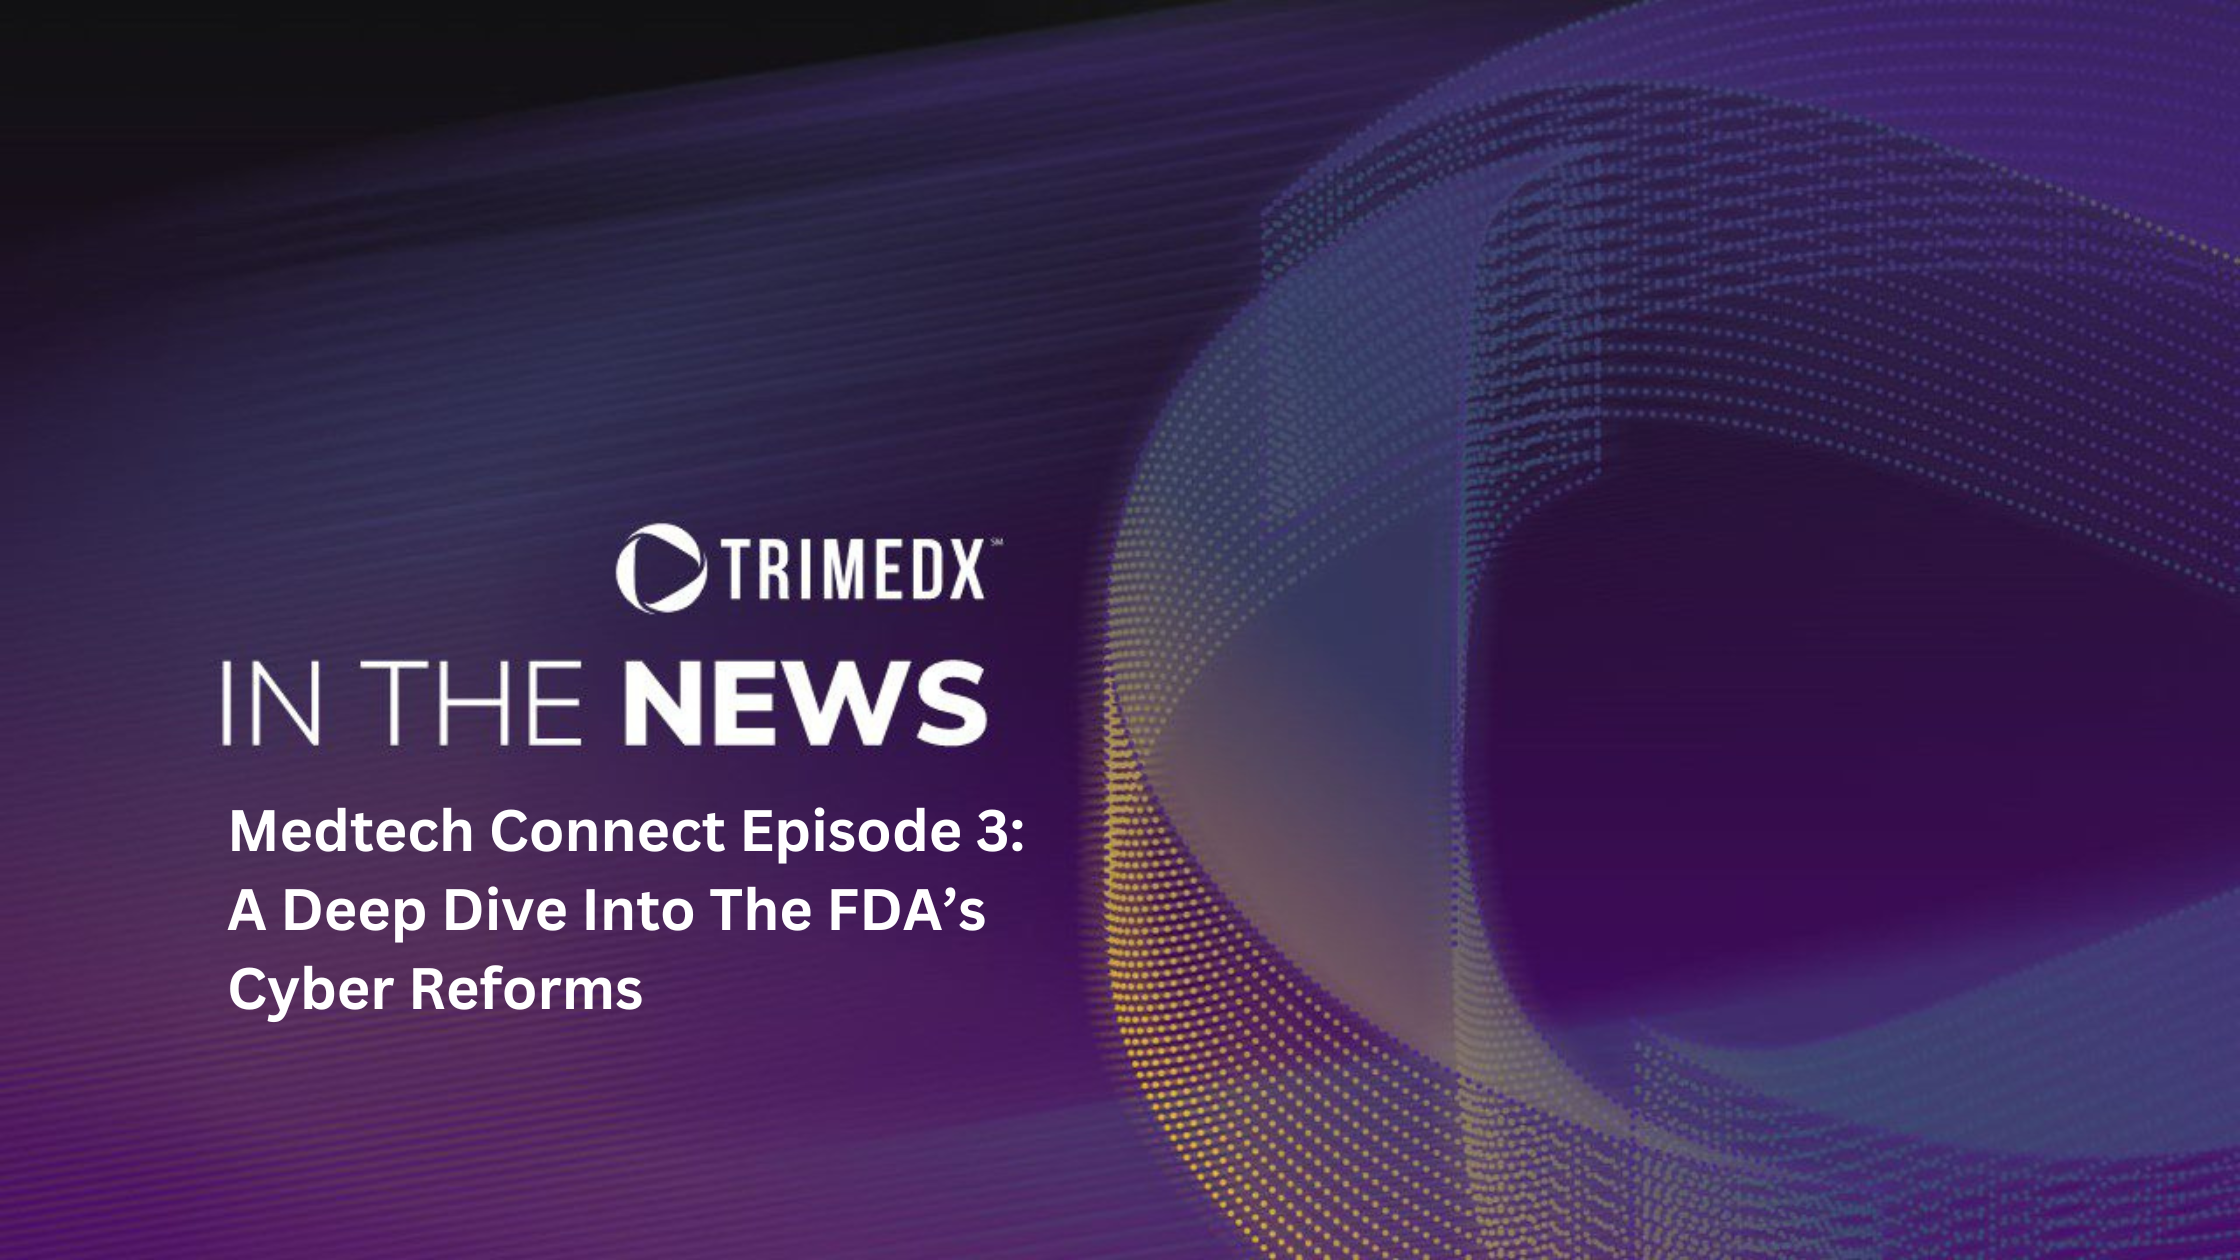 Medtech Connect Episode 3: A Deep Dive Into The FDA’s Cyber Reforms